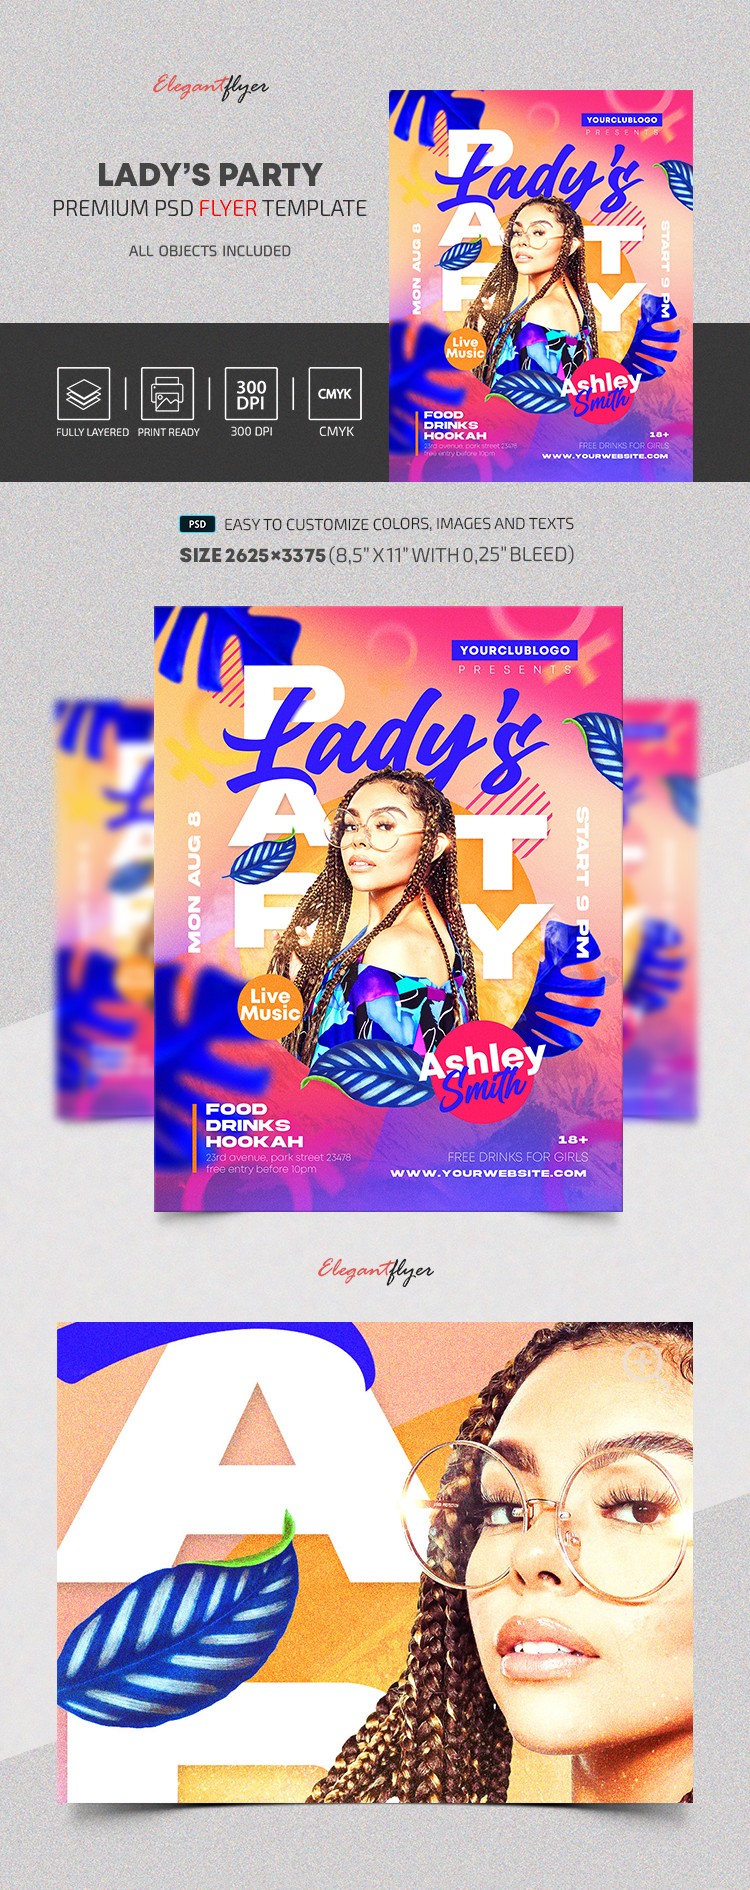 Lady's Party Flyer by ElegantFlyer